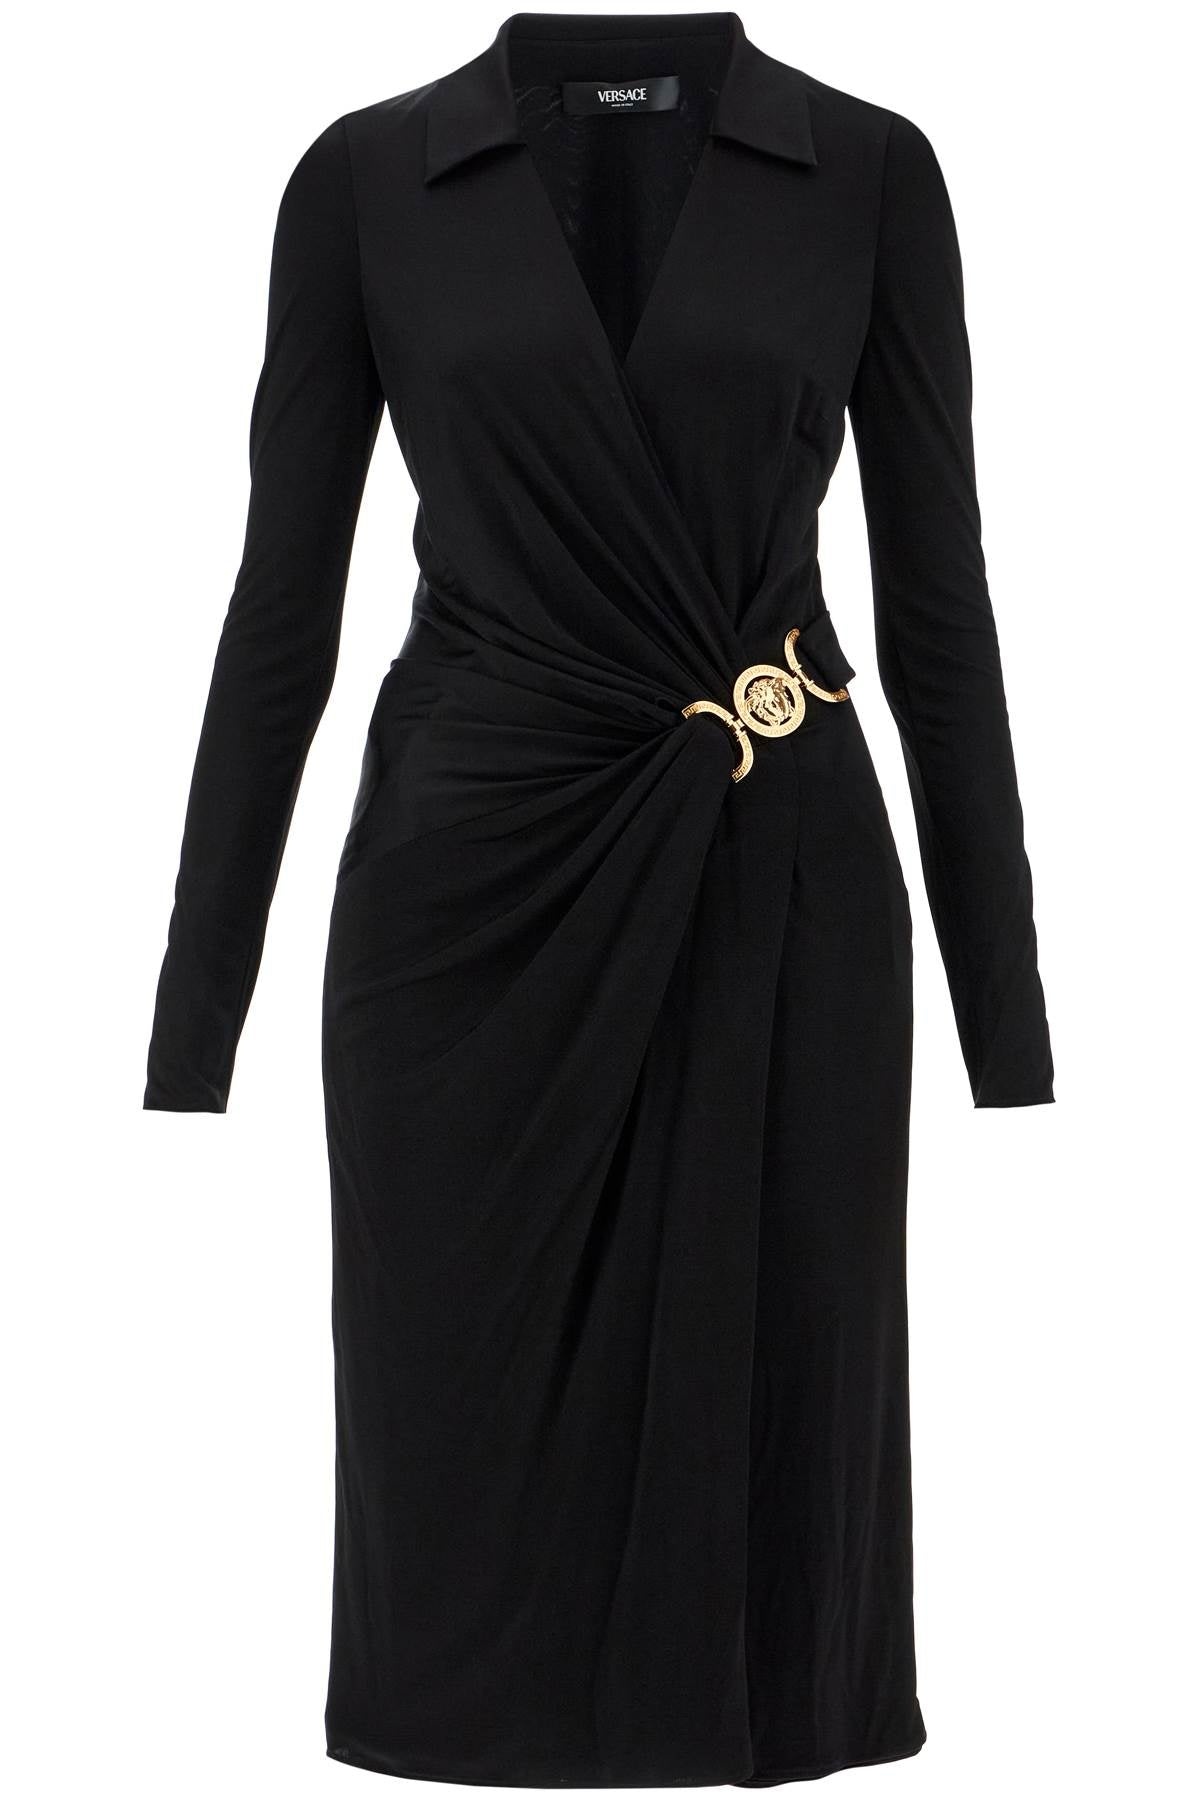 Versace Draped Jersey Dress With Women - 1